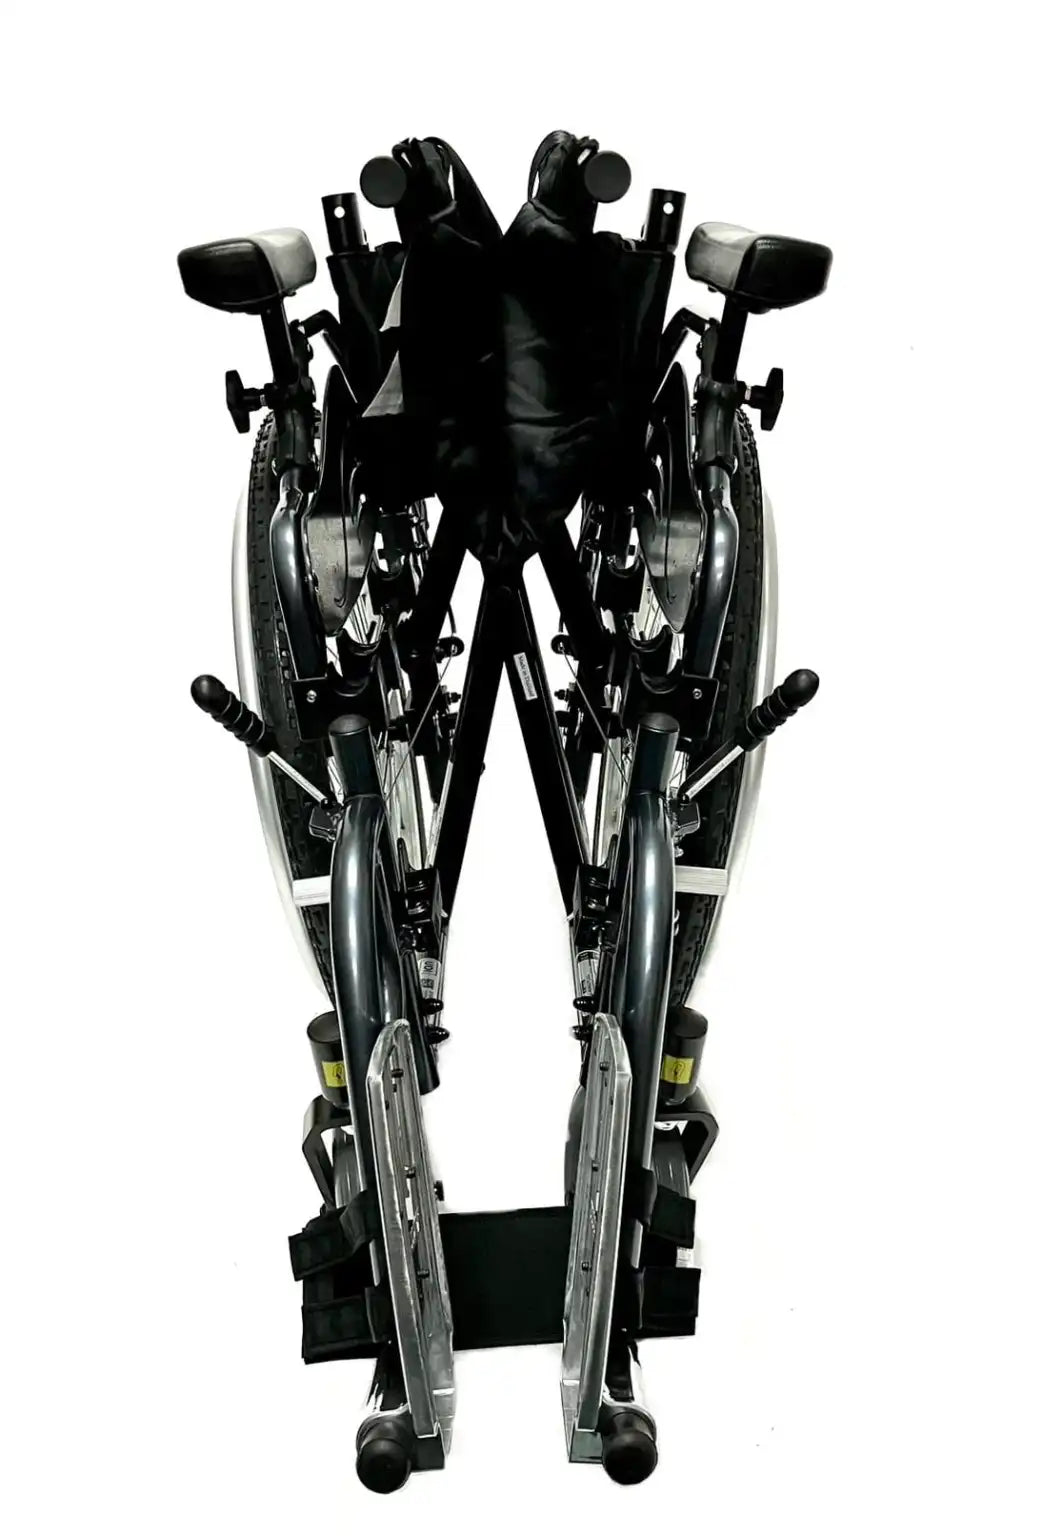 Karman KM-8520X Lightweight Heavy-Duty Wheelchair